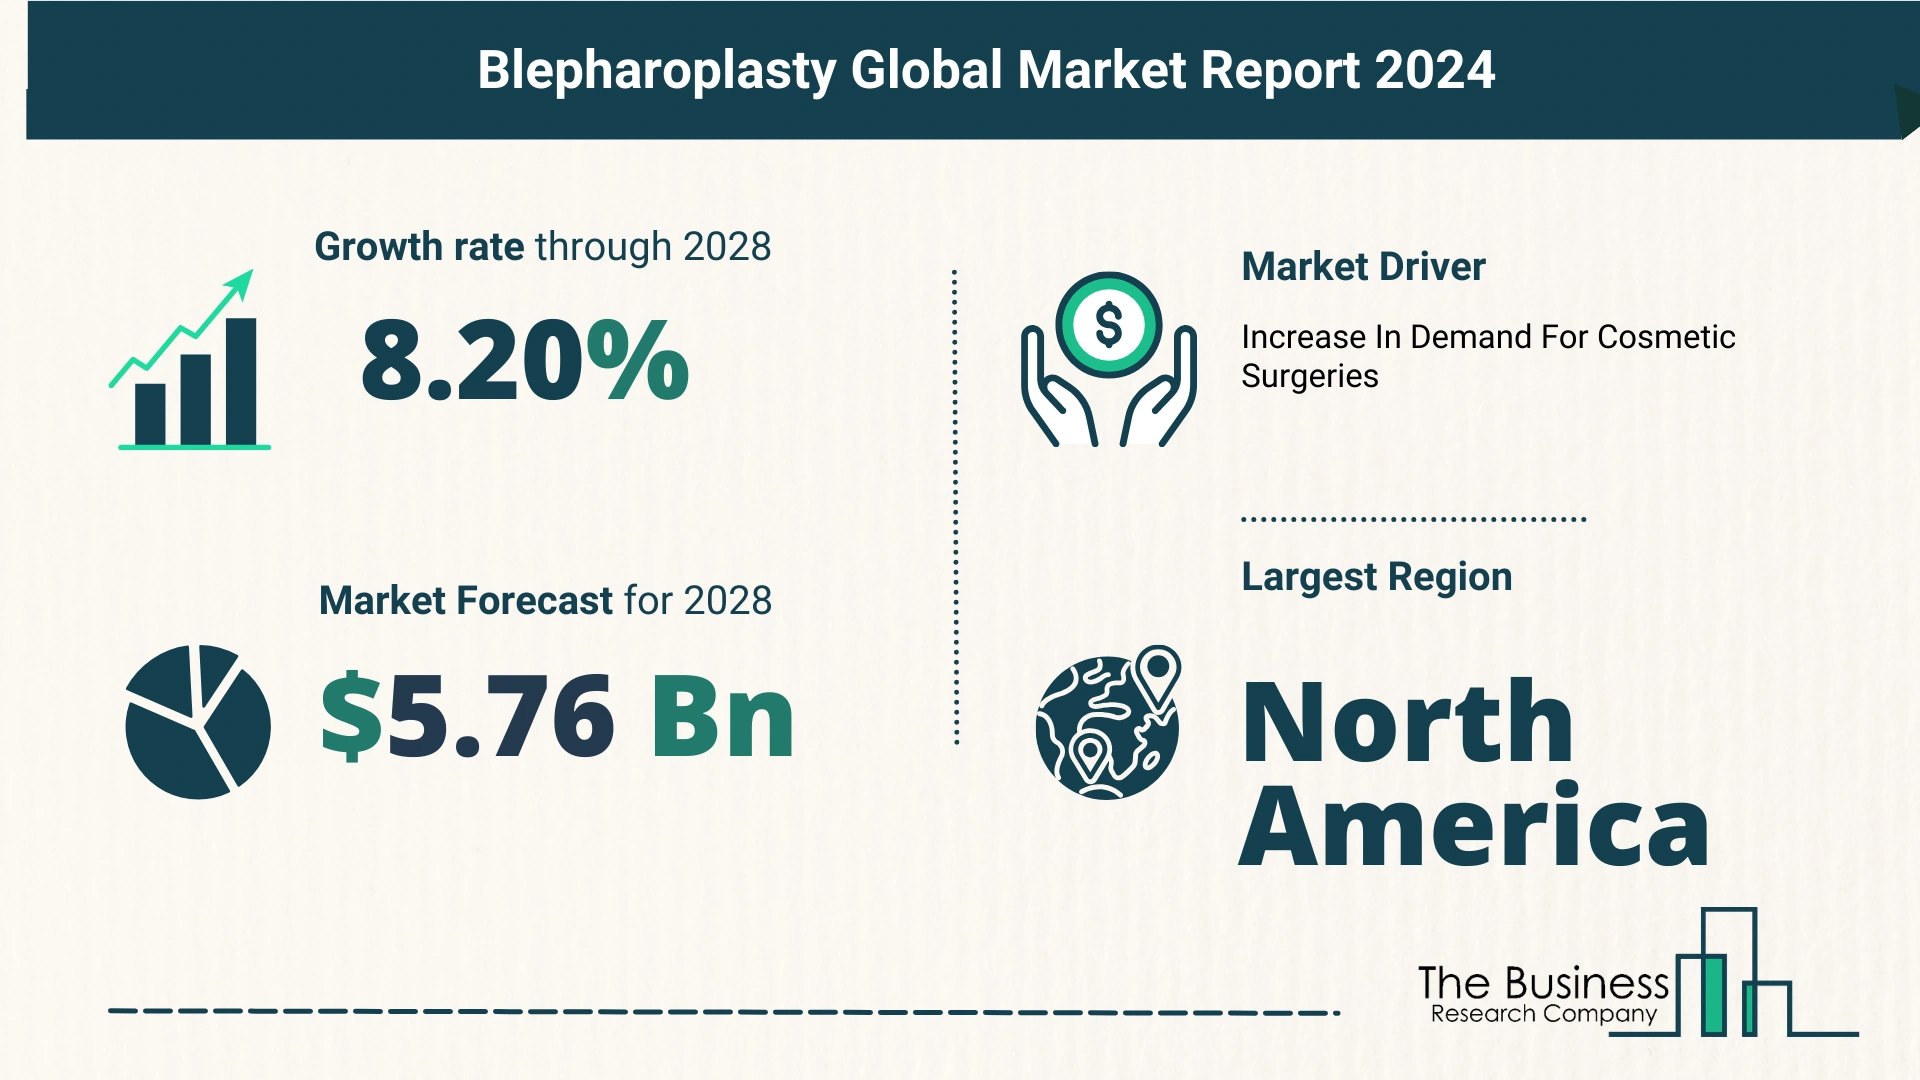 Global Blepharoplasty Market Size